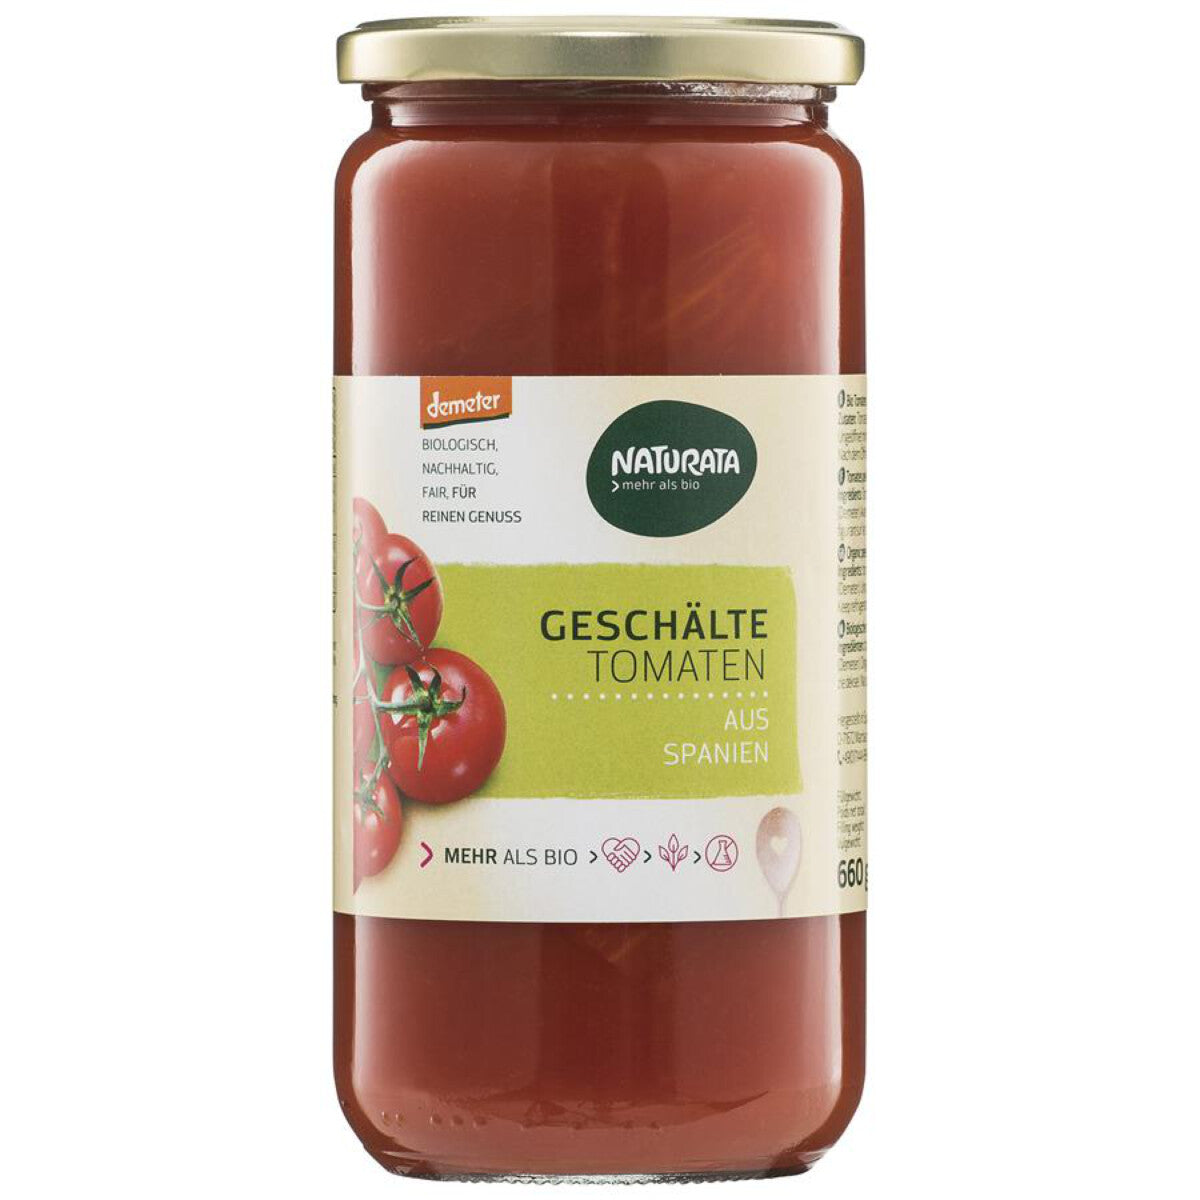 NATURATA Tomaten geschält in Tomatensauce - 660 g